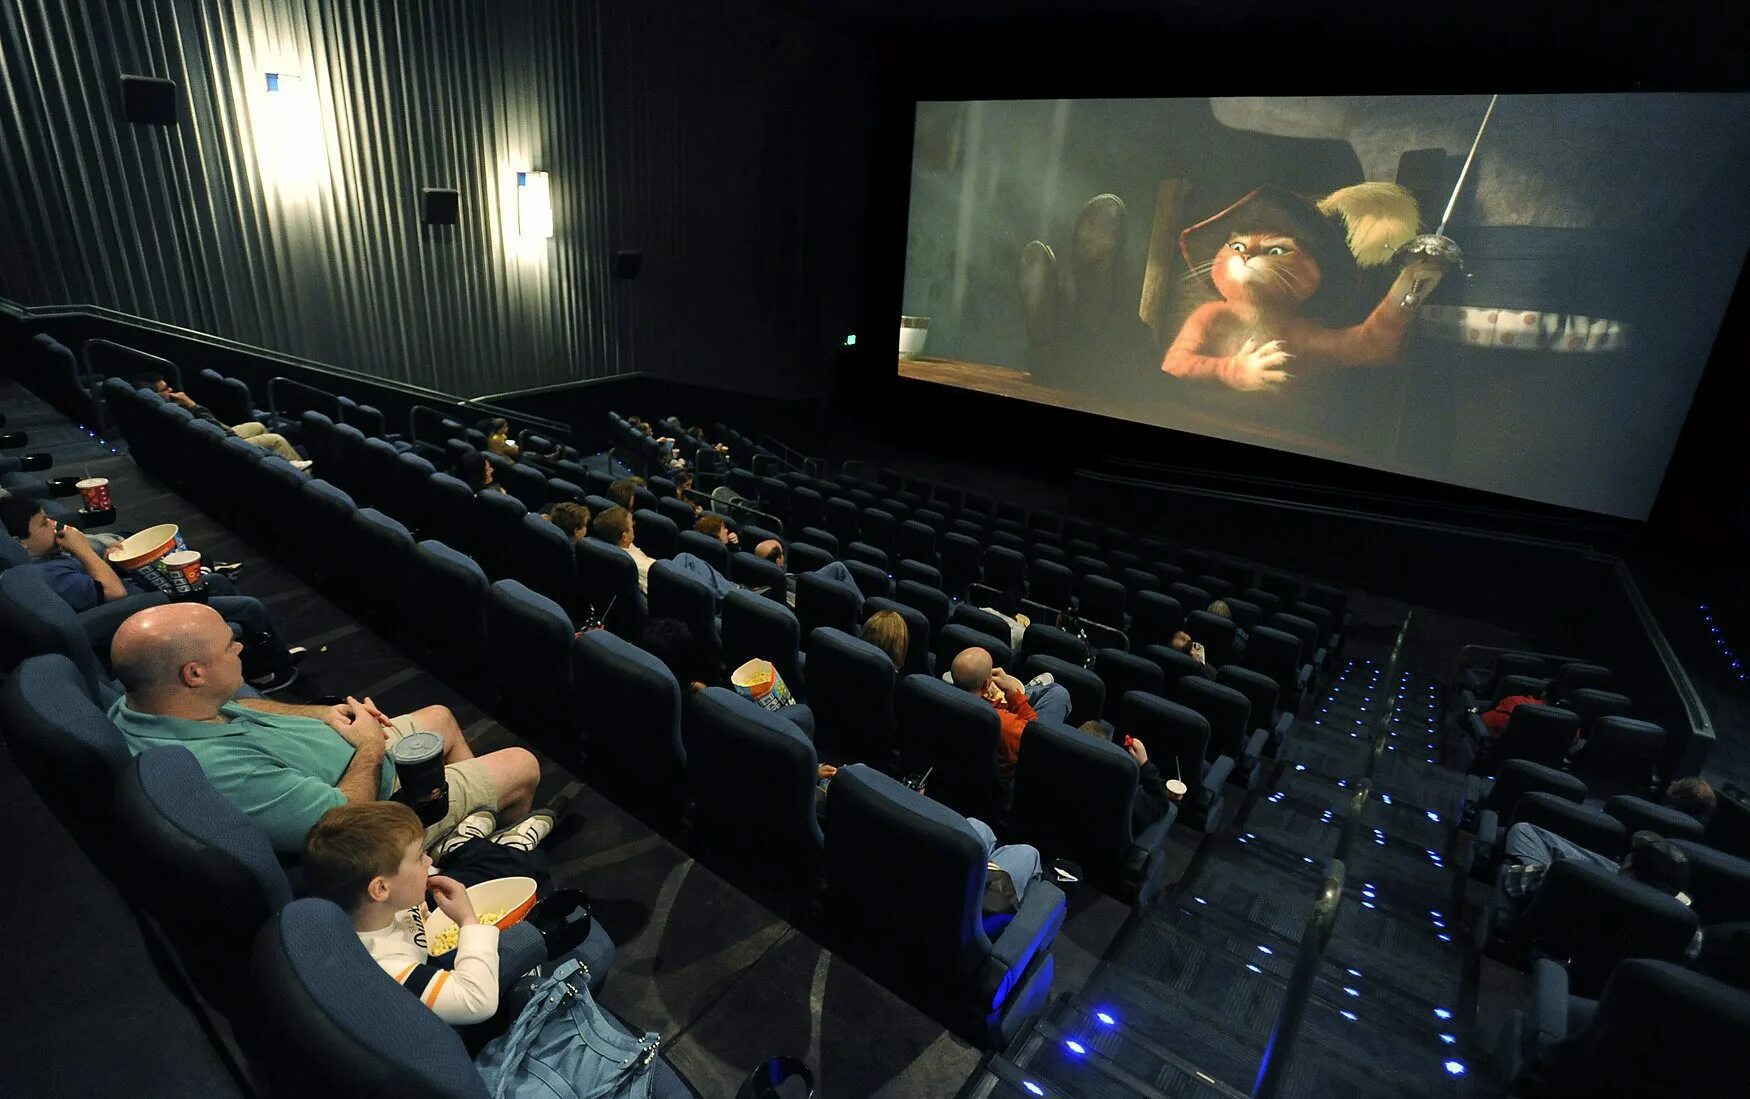 Дата кинотеатрах. Люди в кинотеатре. Экран кинотеатра с людьми. Зал кинотеатра с людьми. Кинотеатр зал с фильмом.